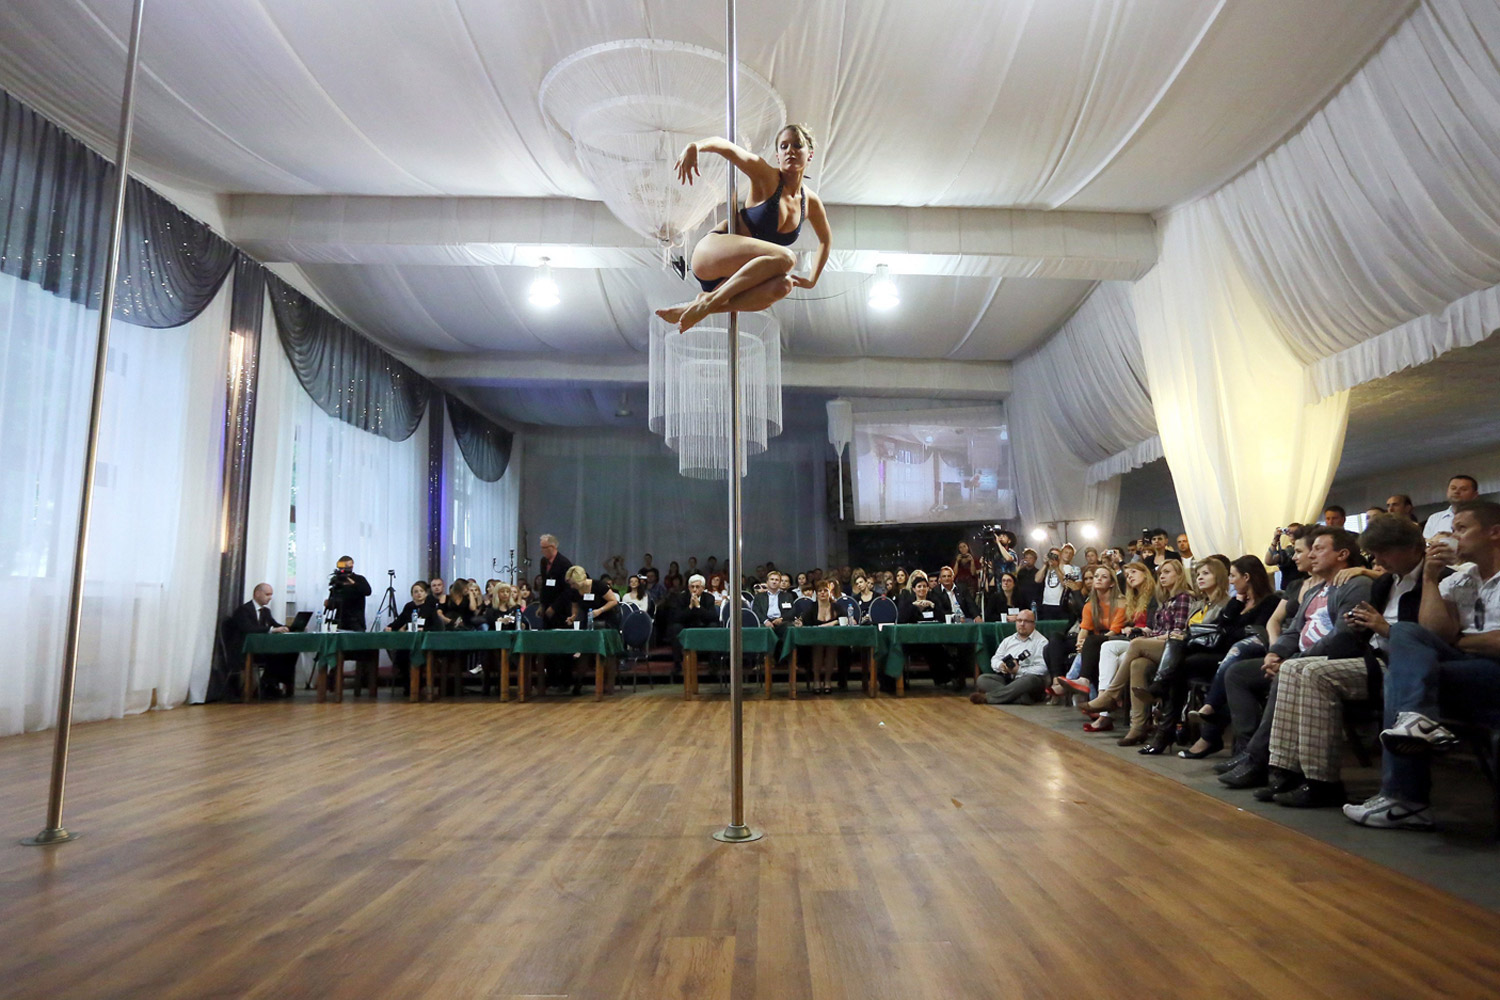 June 3, 2012. Dancer Aleksandra Kolczynska during the 1st Polish Pole Dance Championship in Skaryszew, Poland.